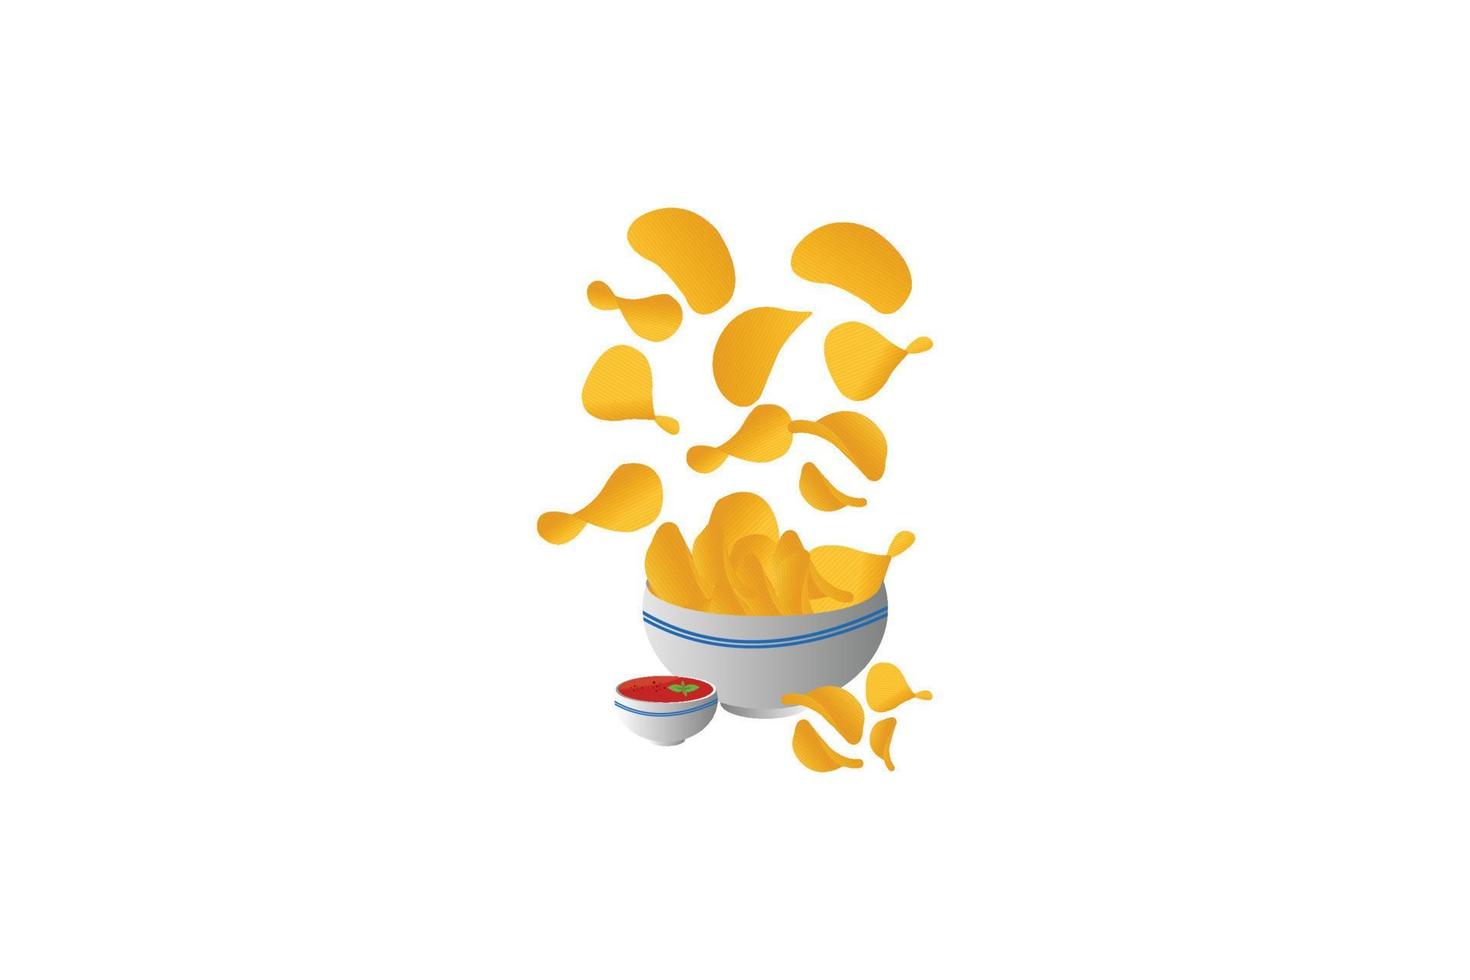 patata papas fritas ilustración vector